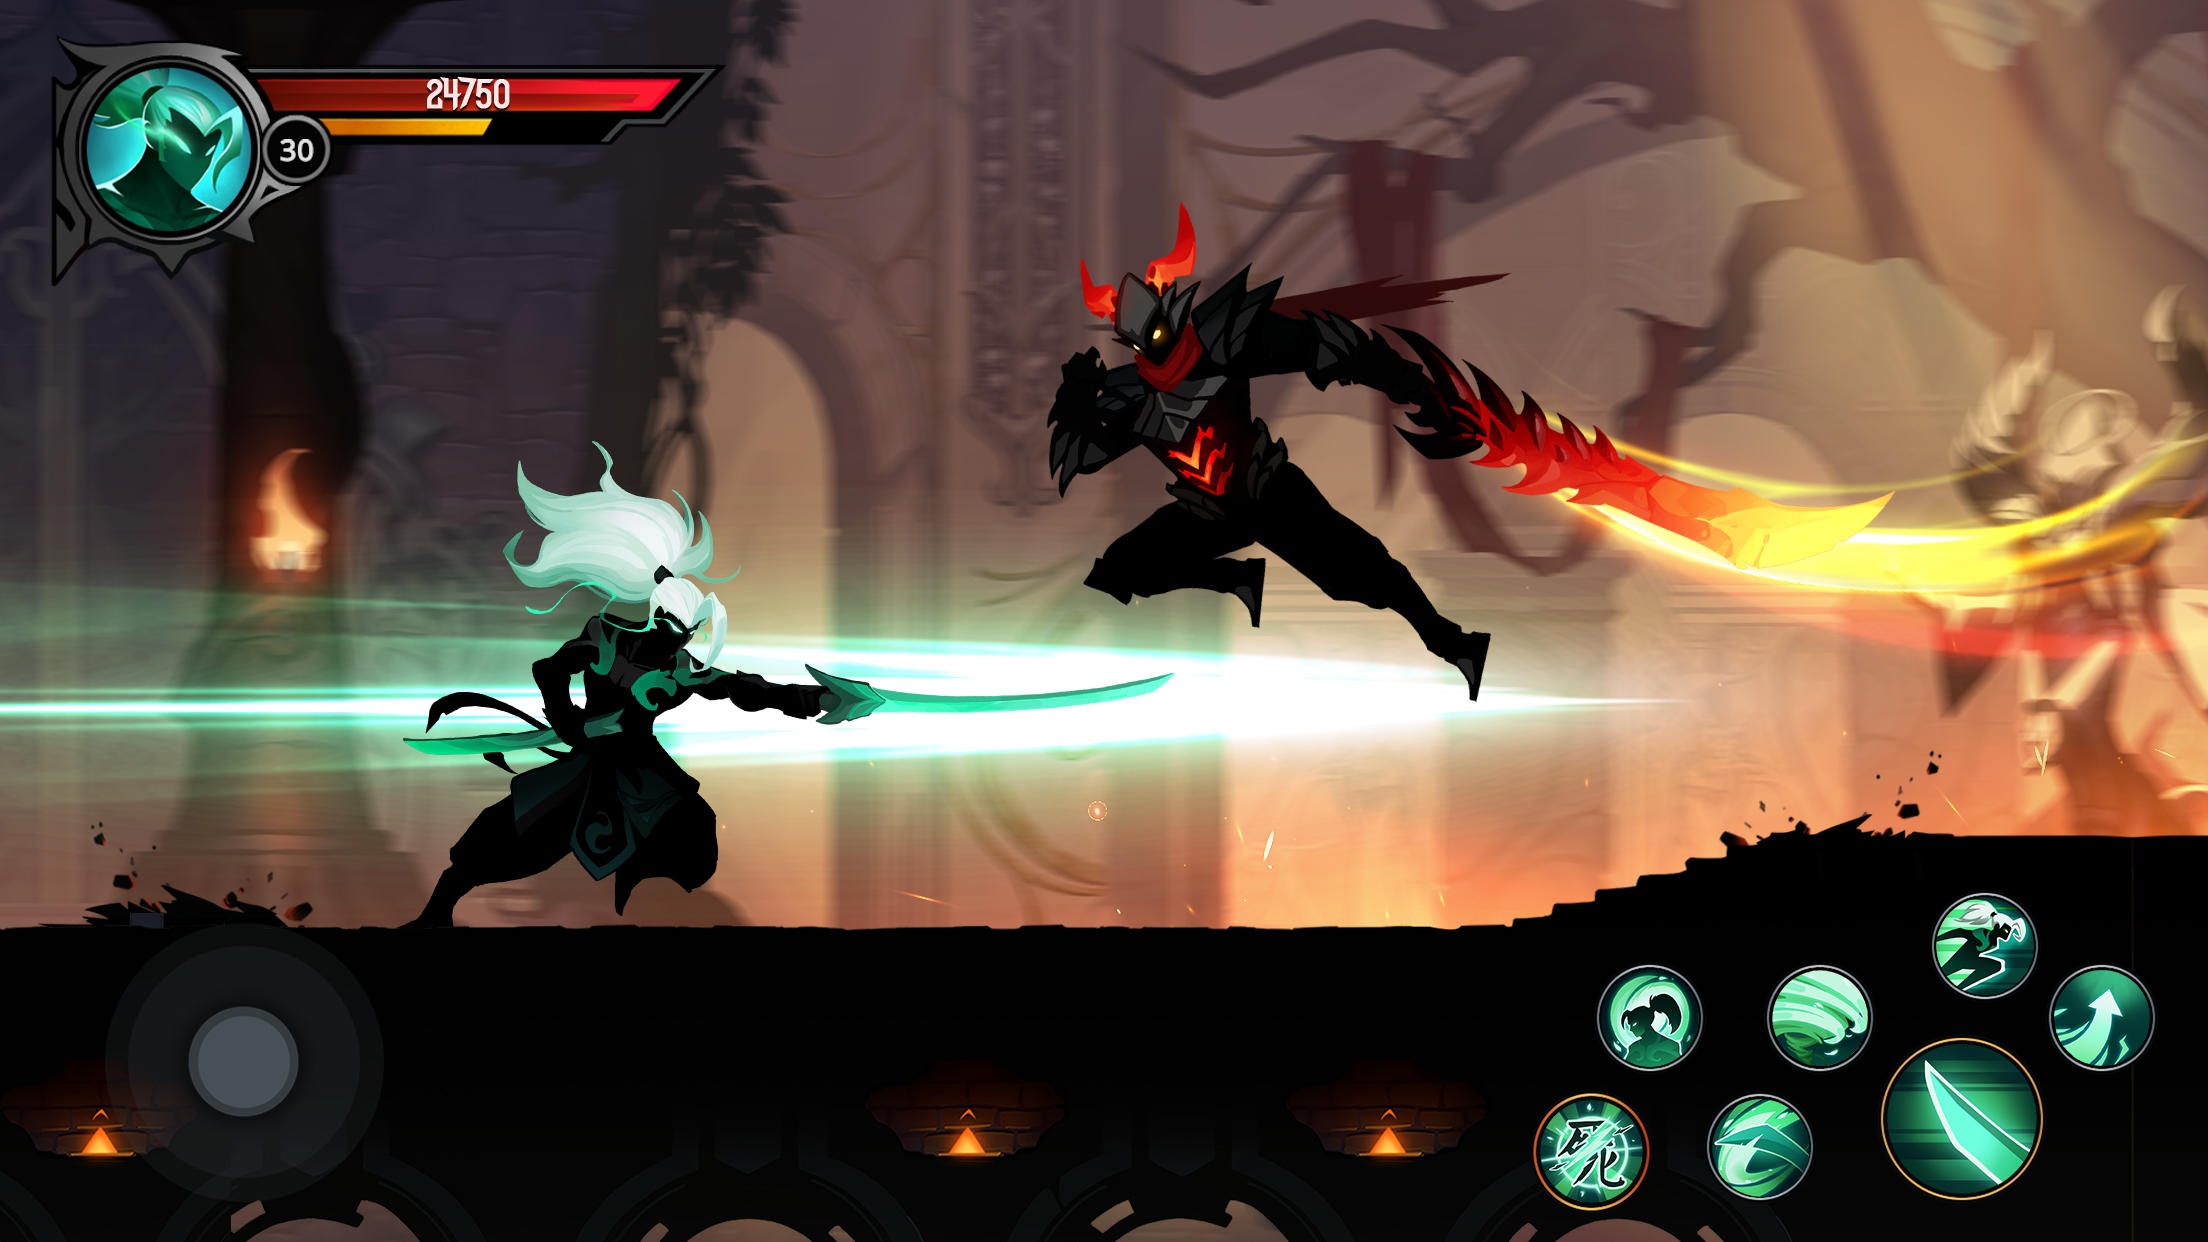 Screenshot 1 of Shadow Knight: Ninja Permainan RPG 3.24.229